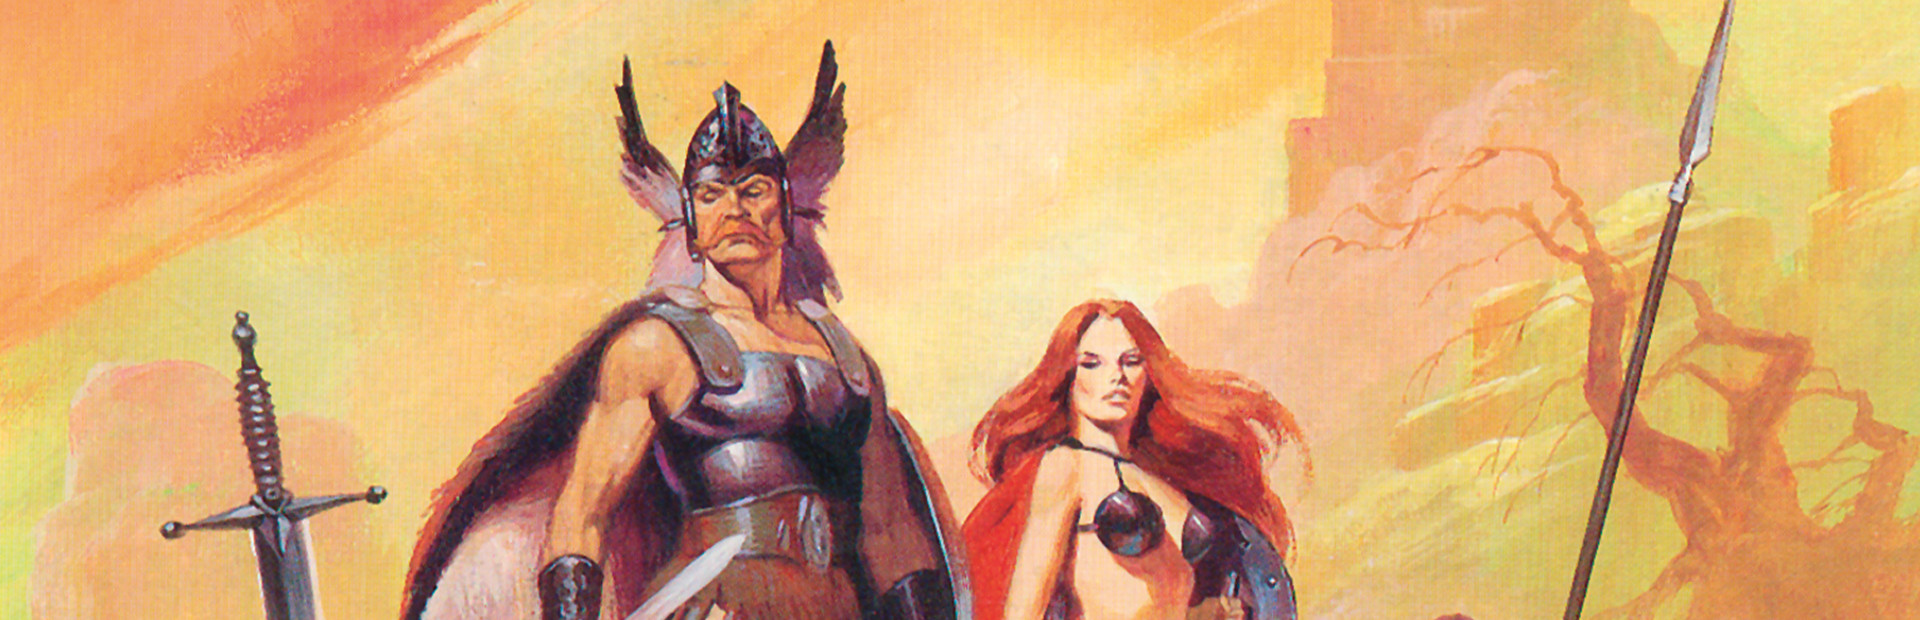 Realms of Arkania 1 - Blade of Destiny Classic cover image